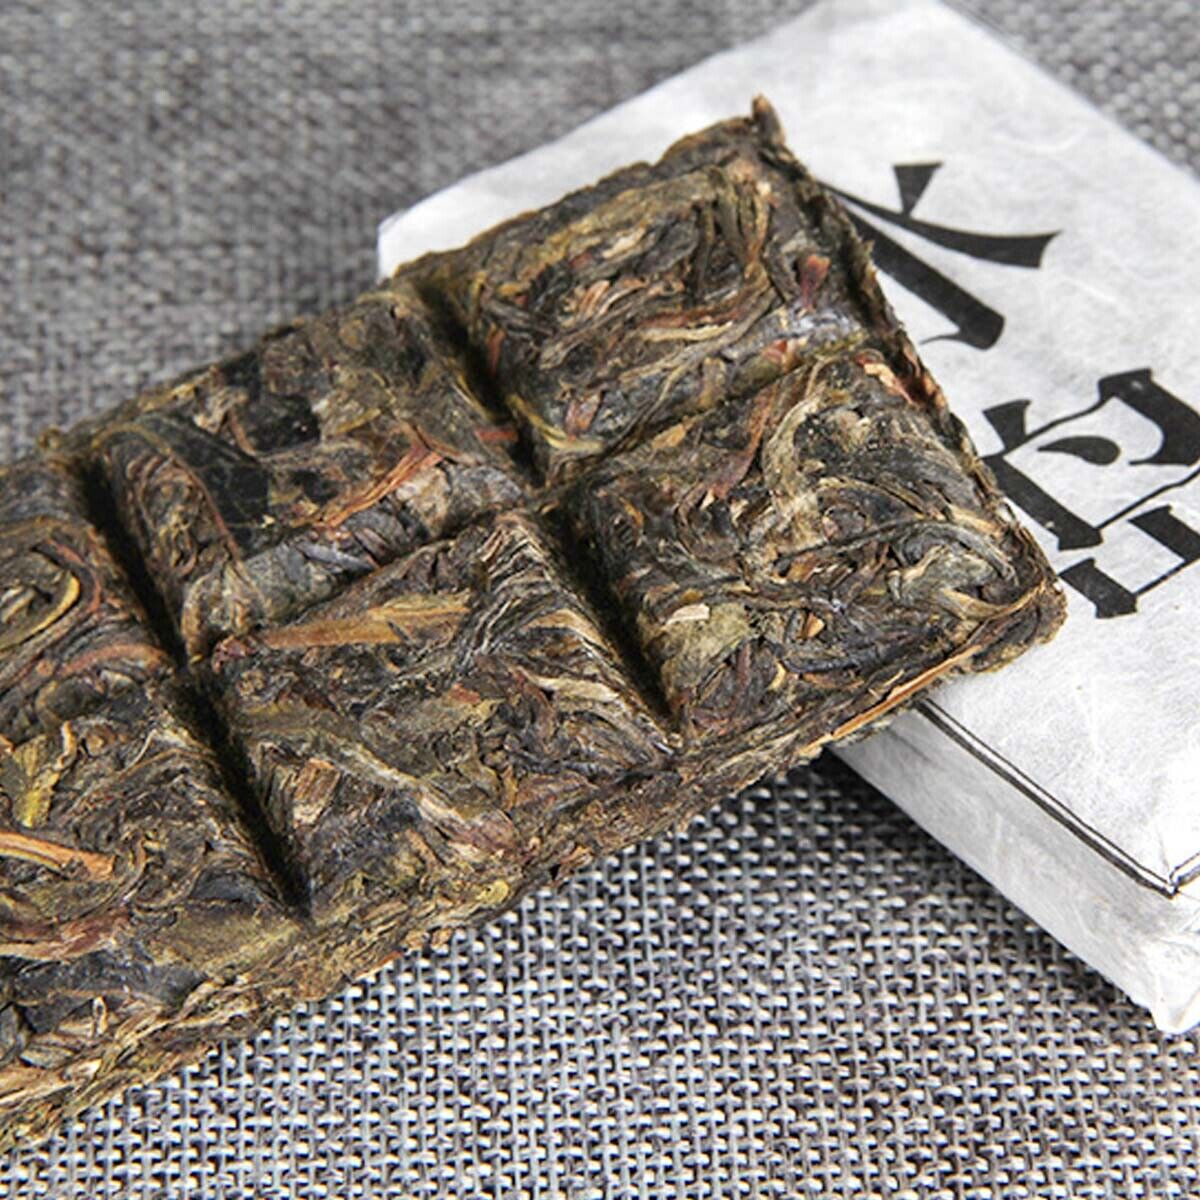 Icelandic Puer Tea Brick Healthy Food Mini Cha Puerh Top Grade Old Tea 50g